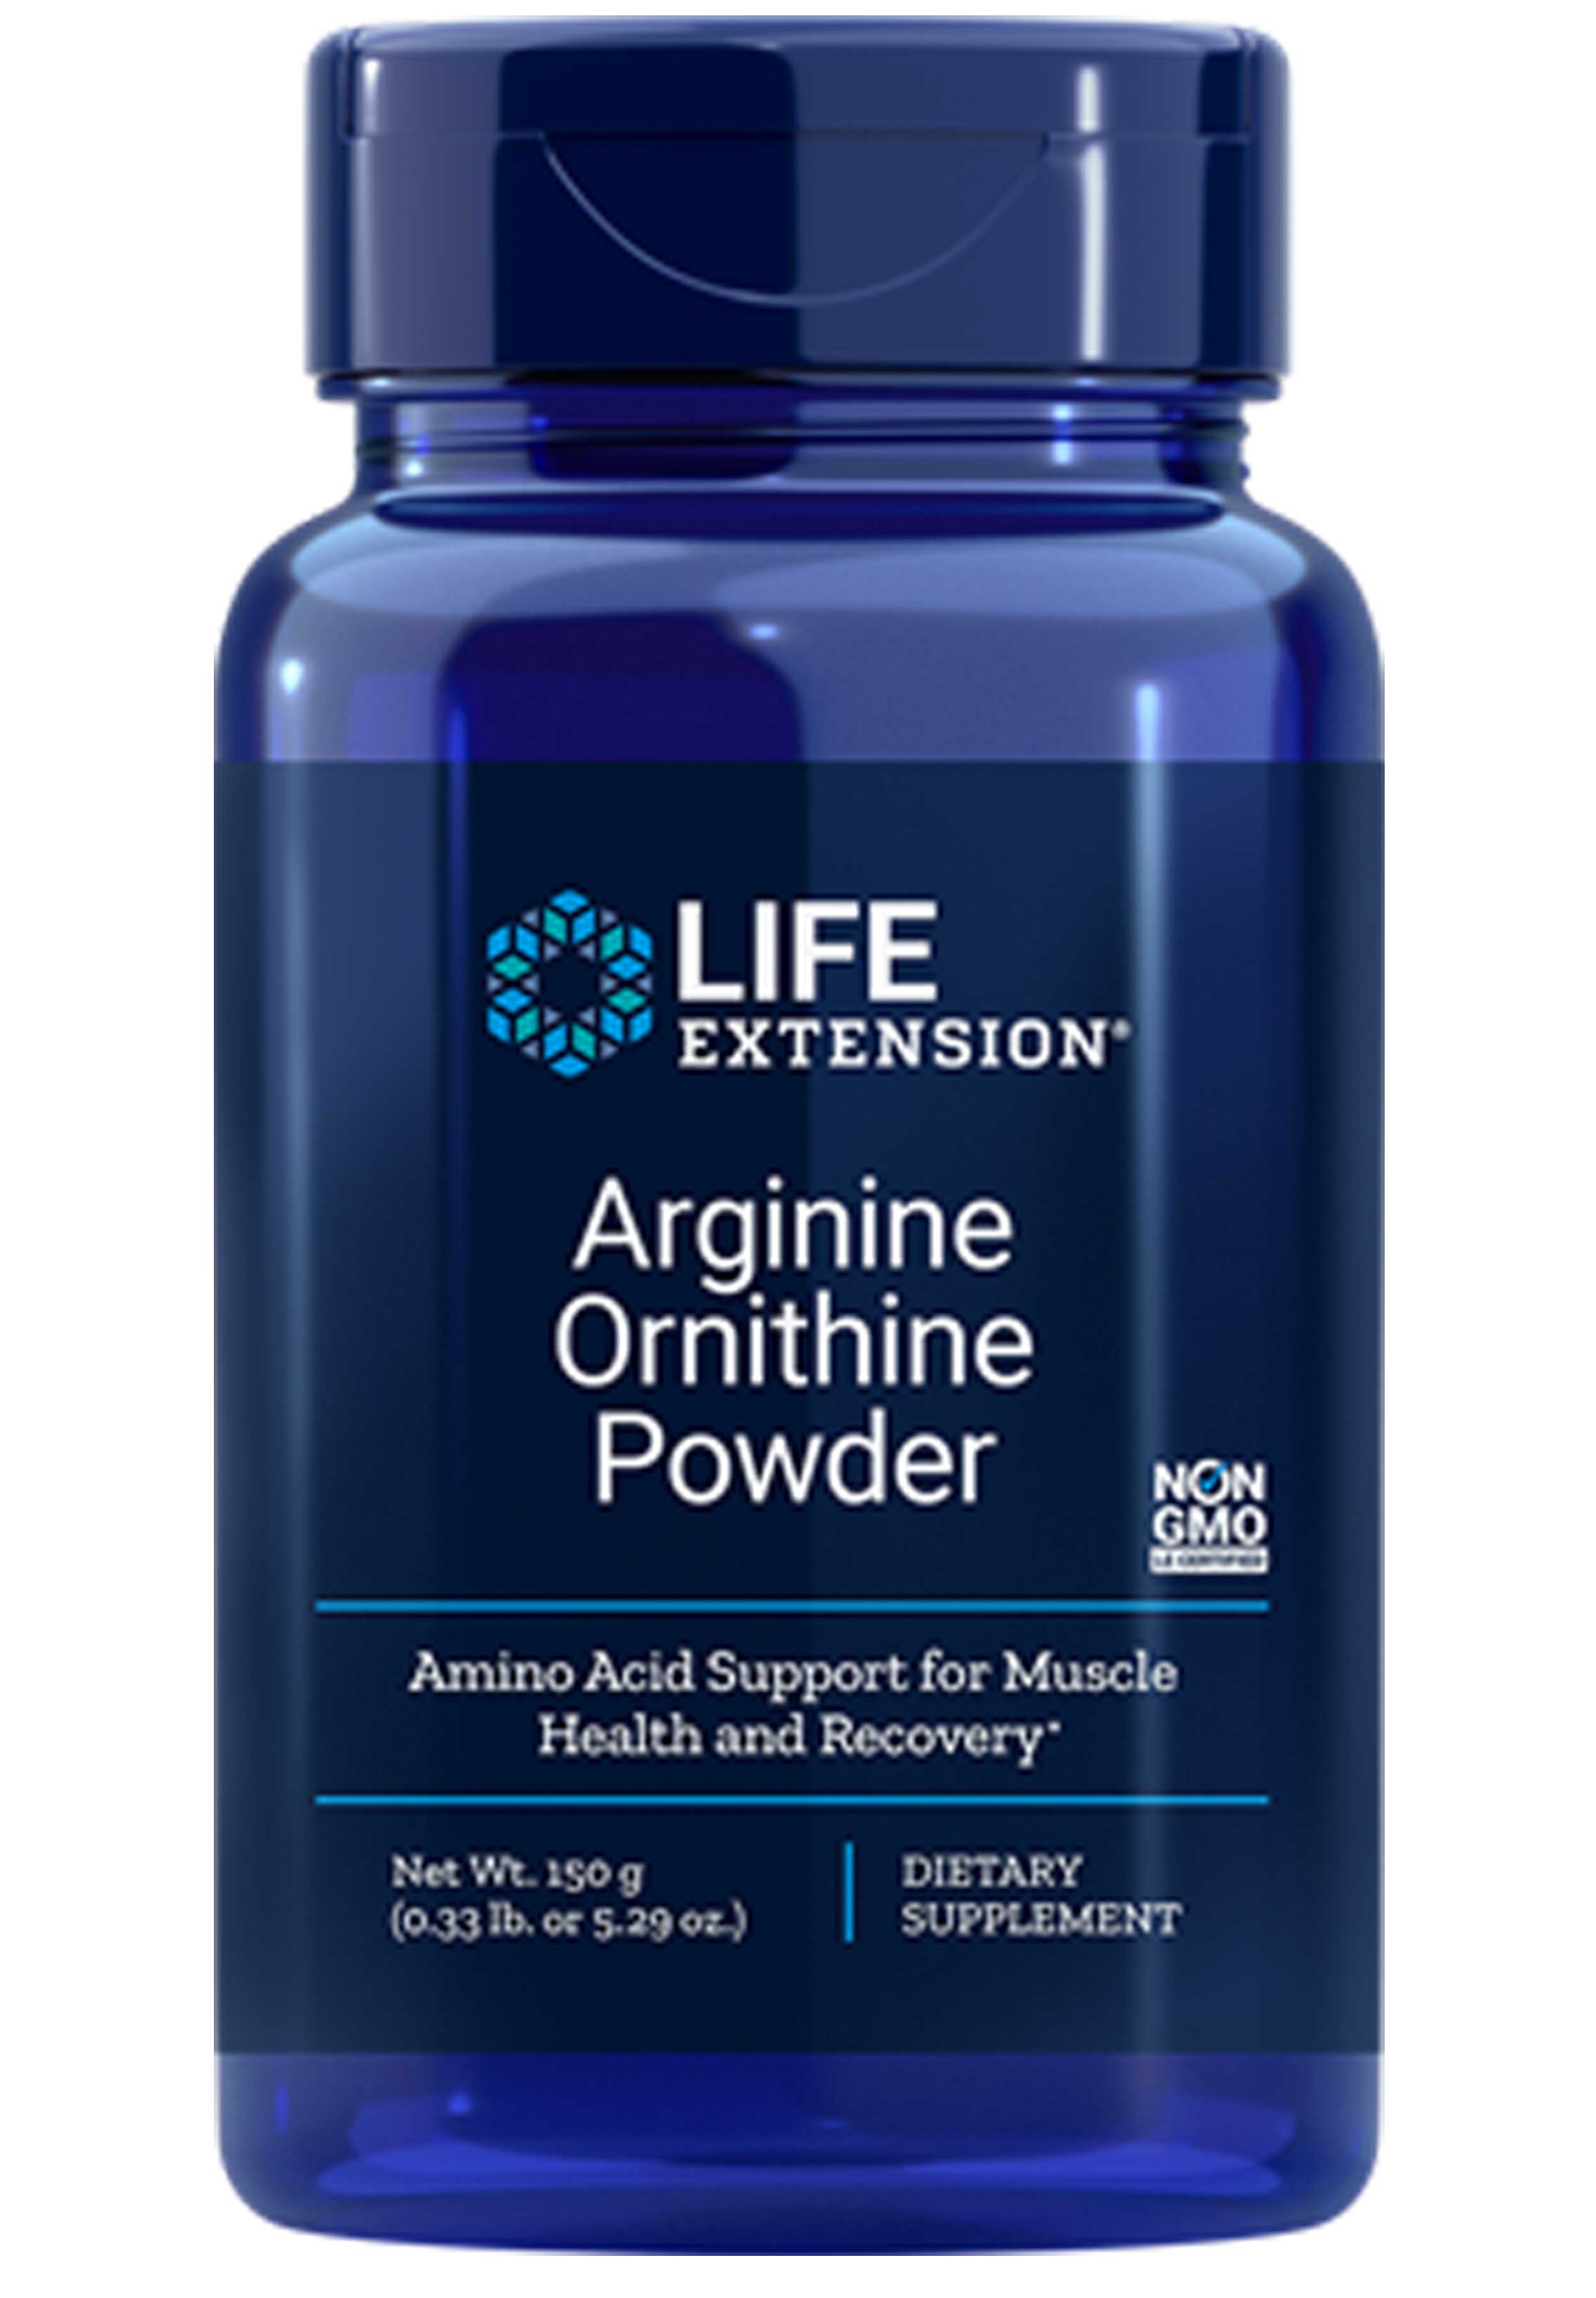 Life Extension Arginine Ornithine Powder